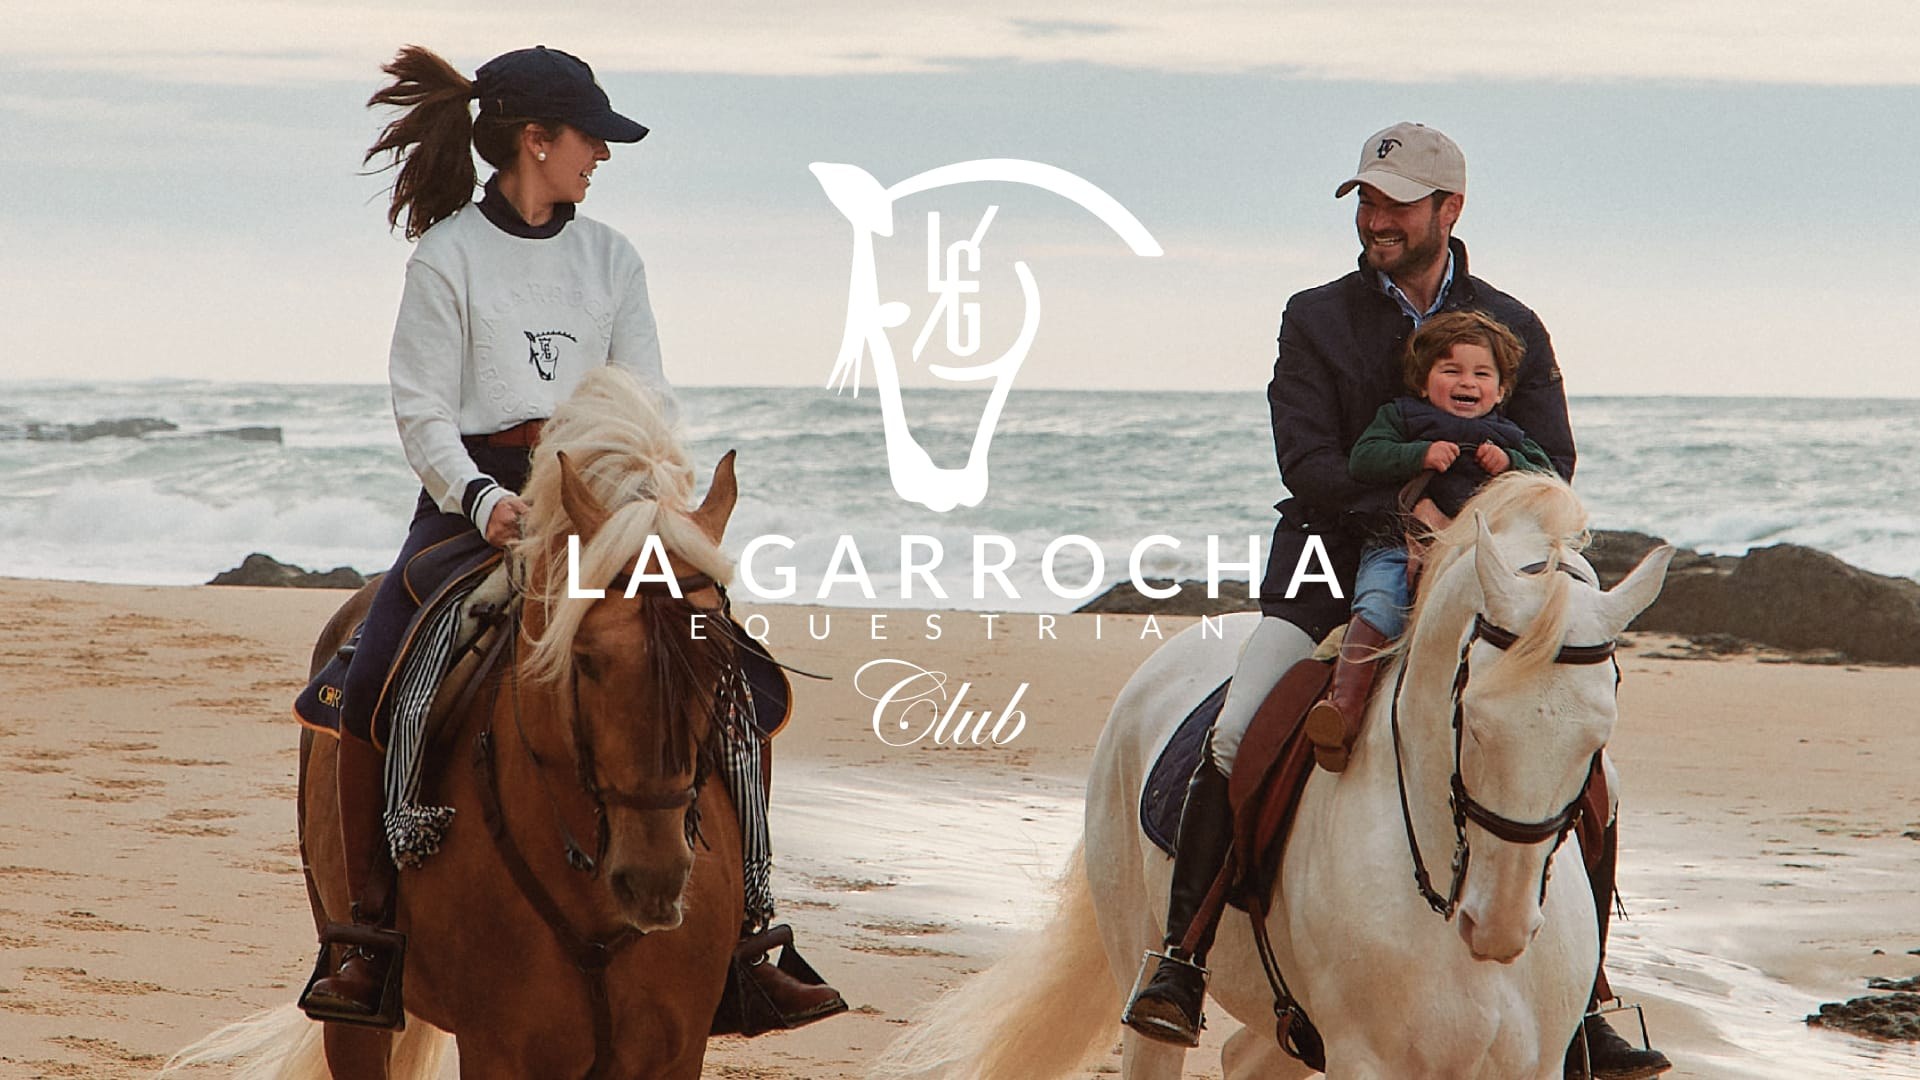 Join Club La Garrocha